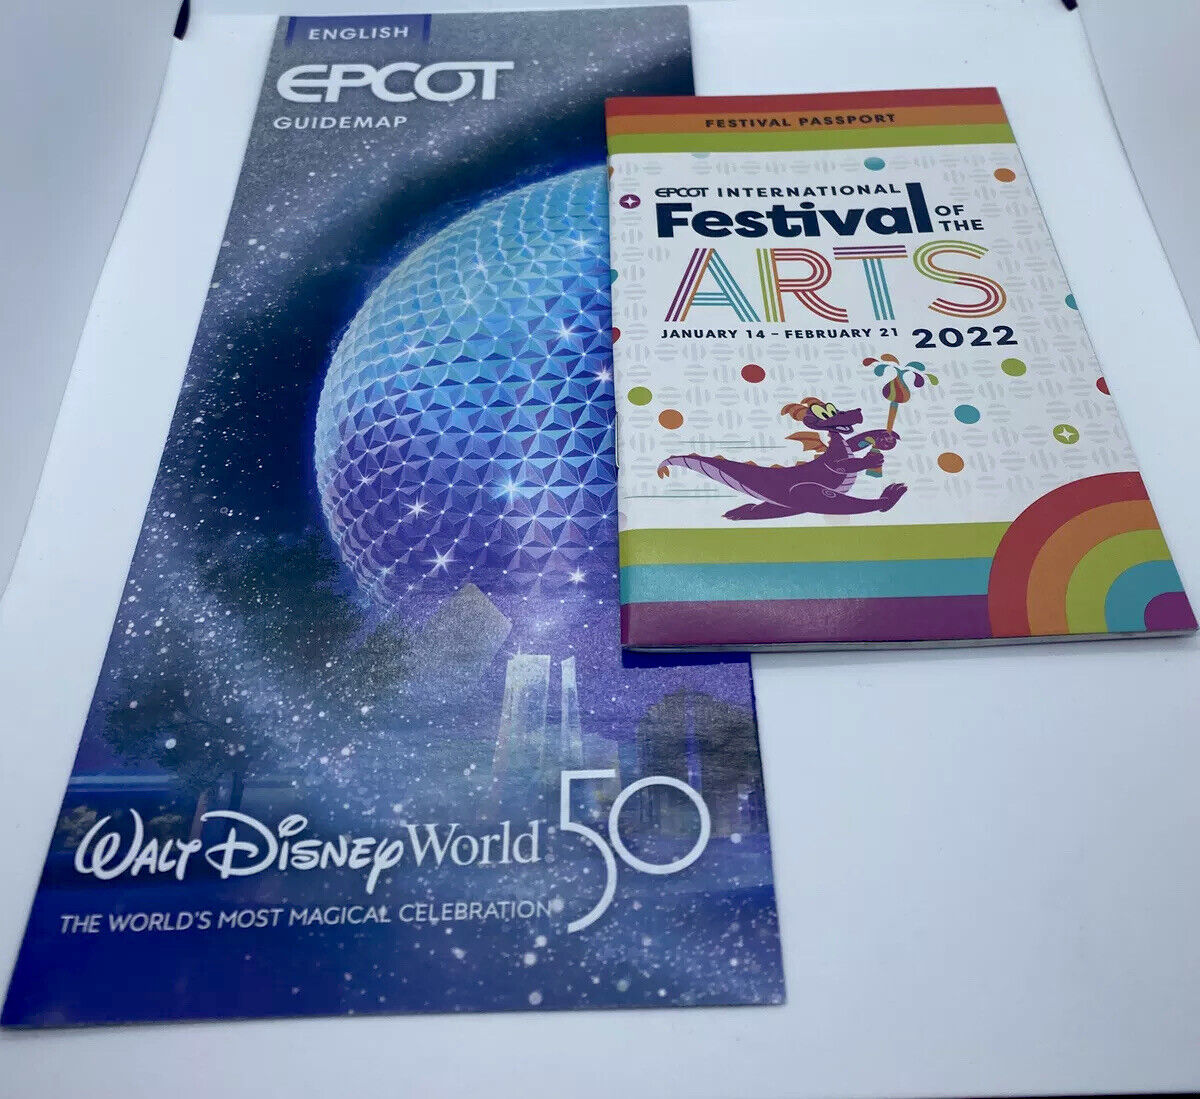 NEW 2022 50th Anniversary EPCOT Disney World Guide Map